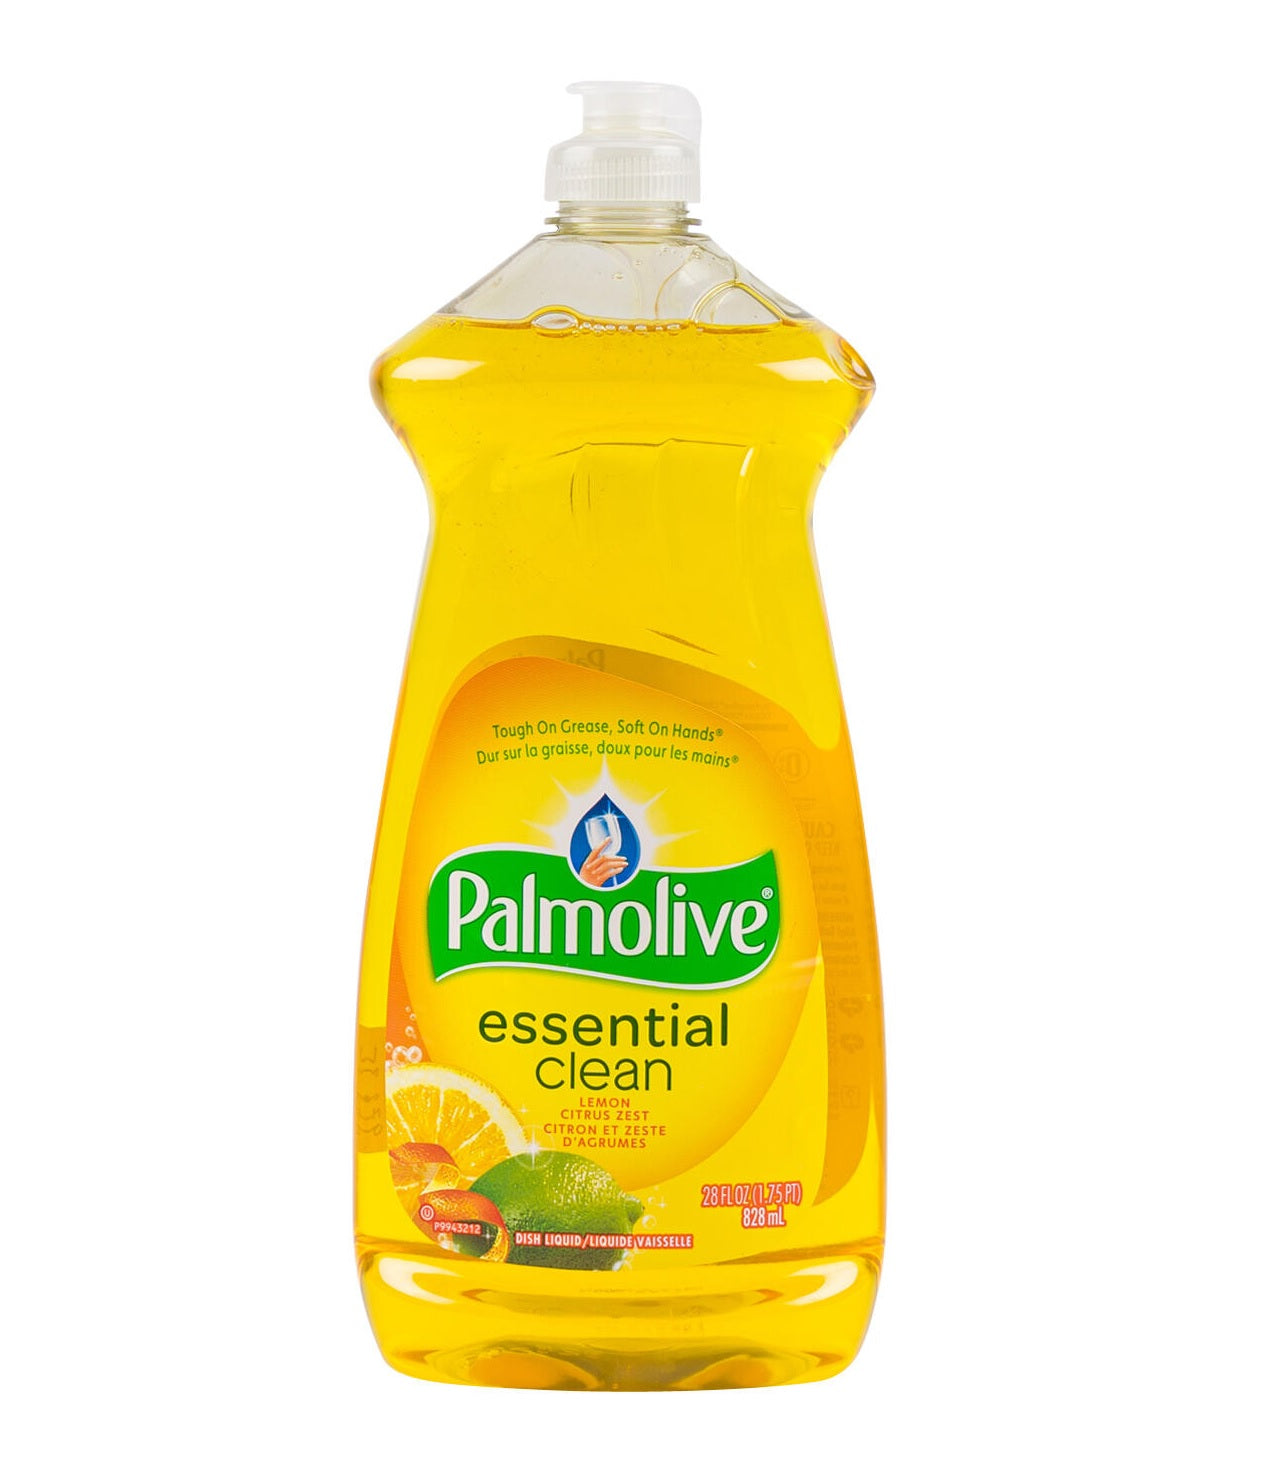 Palmolive Dishwashing Liquid Detergent Lemon - 28oz/9pk